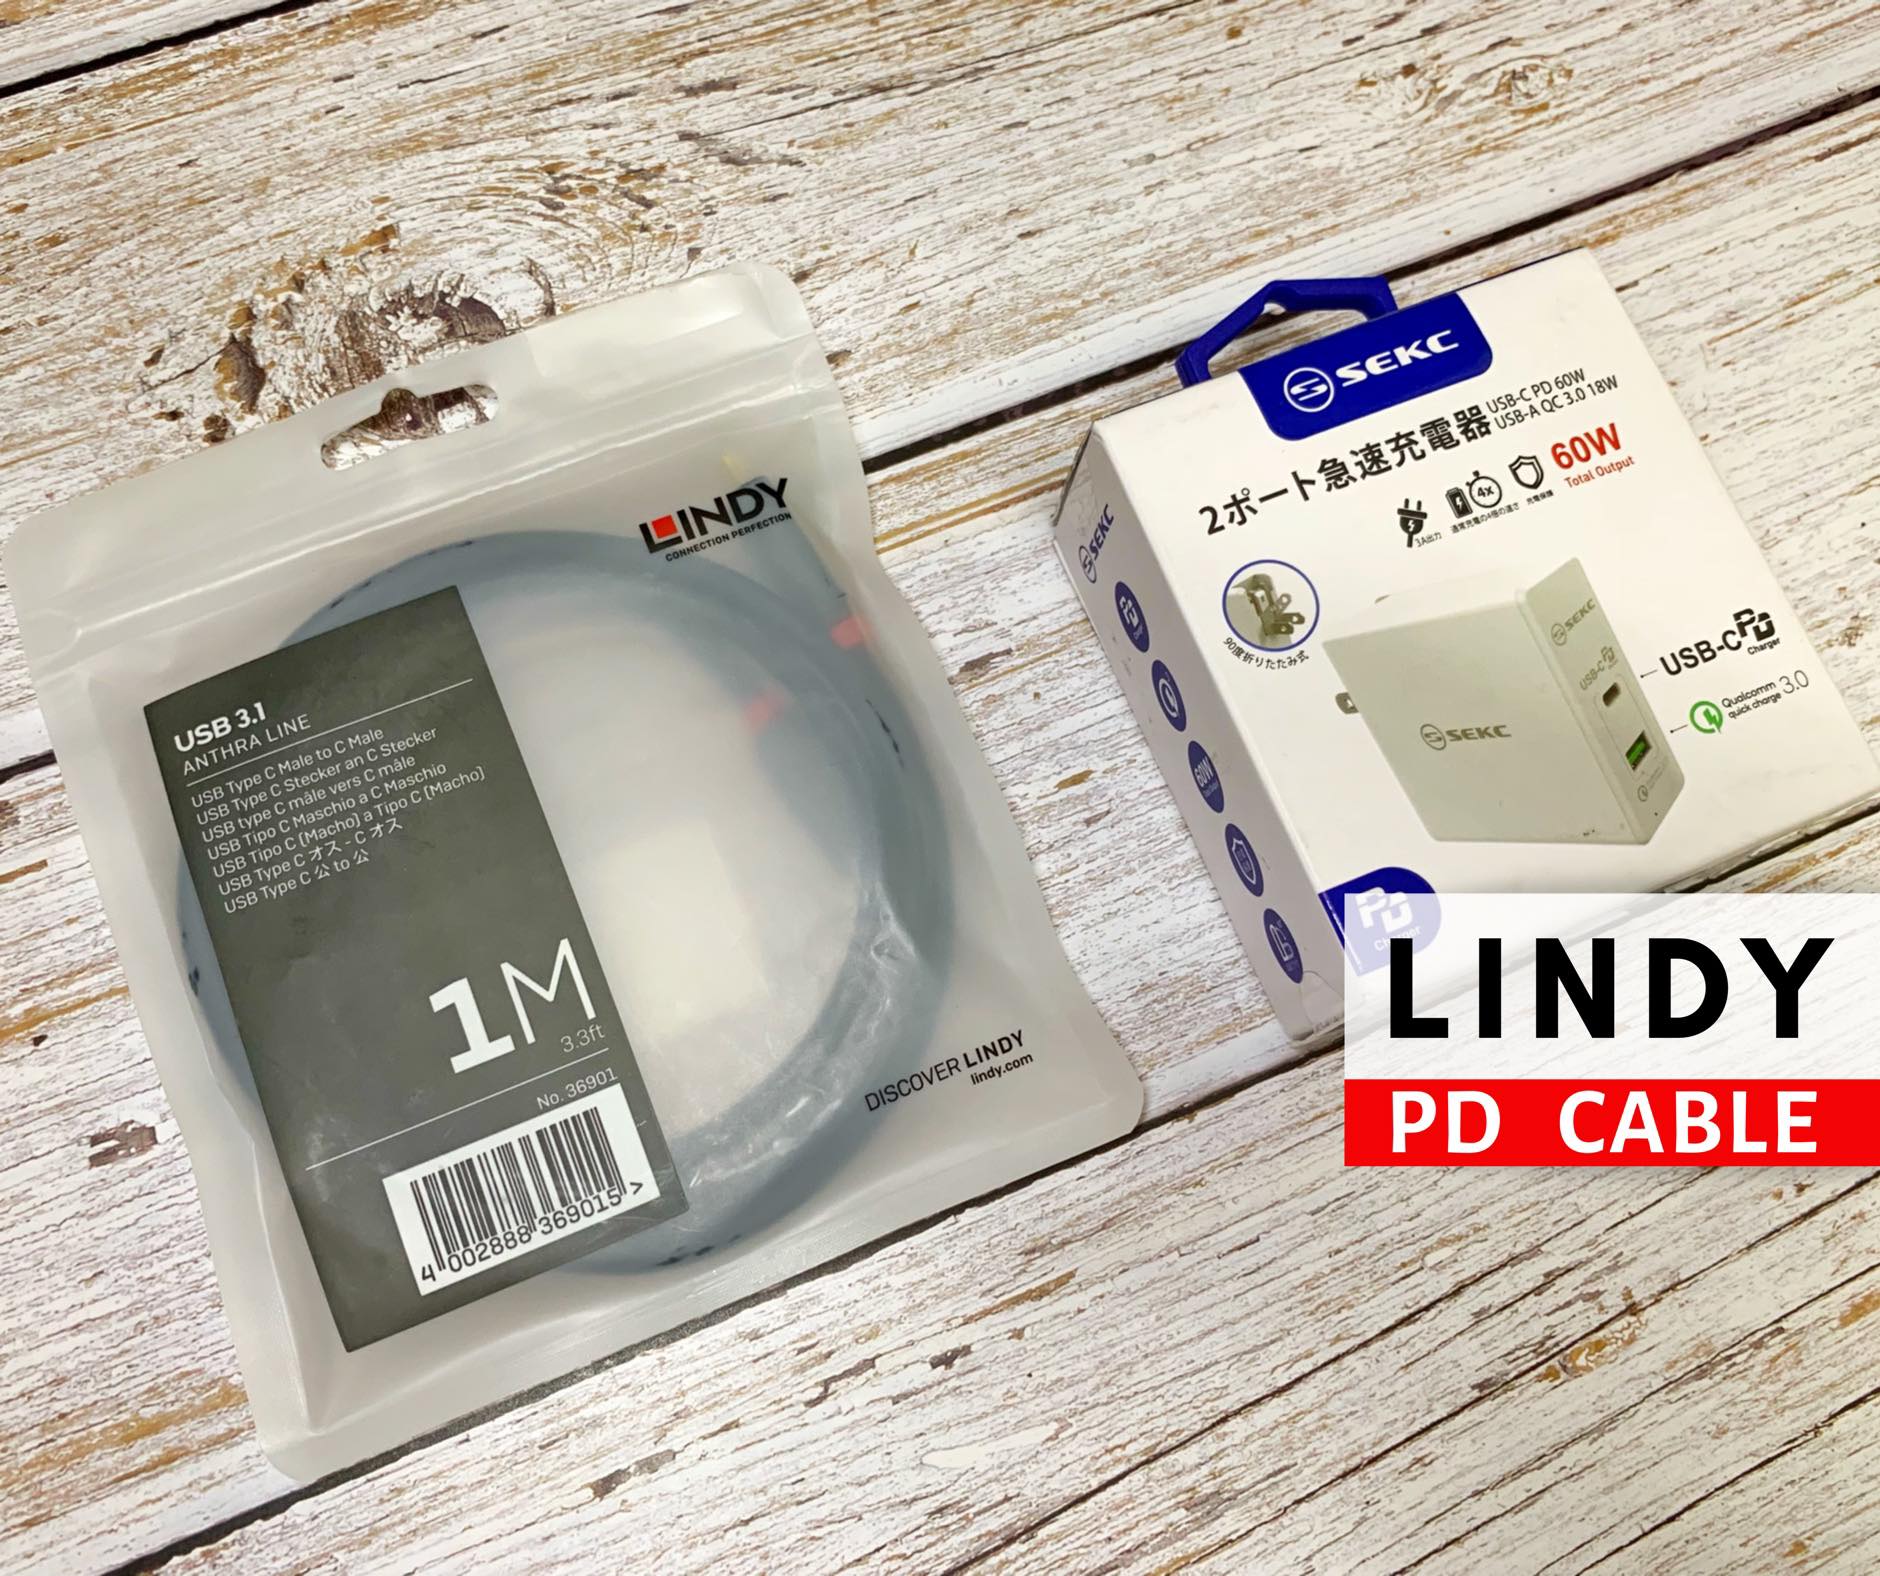 Lindy 林帝 PD 充電線(36901) – MacBook PD 快充與 SSD 傳輸實測